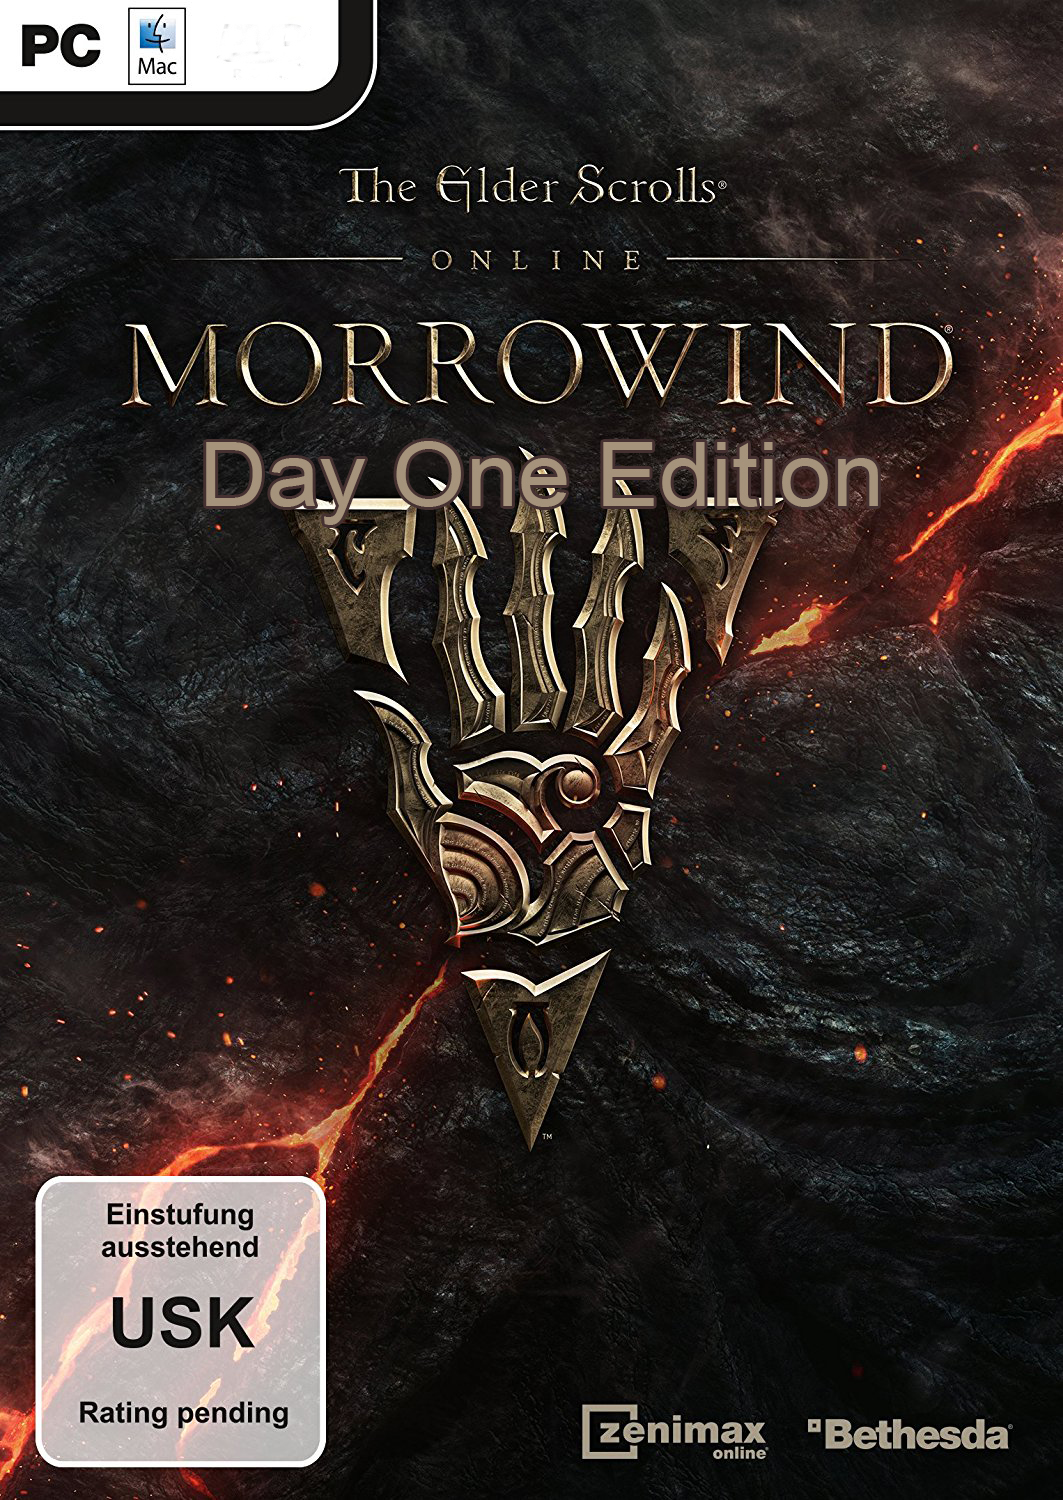 The Elder Scrolls Online Morrowind Day One Edition 2 1 